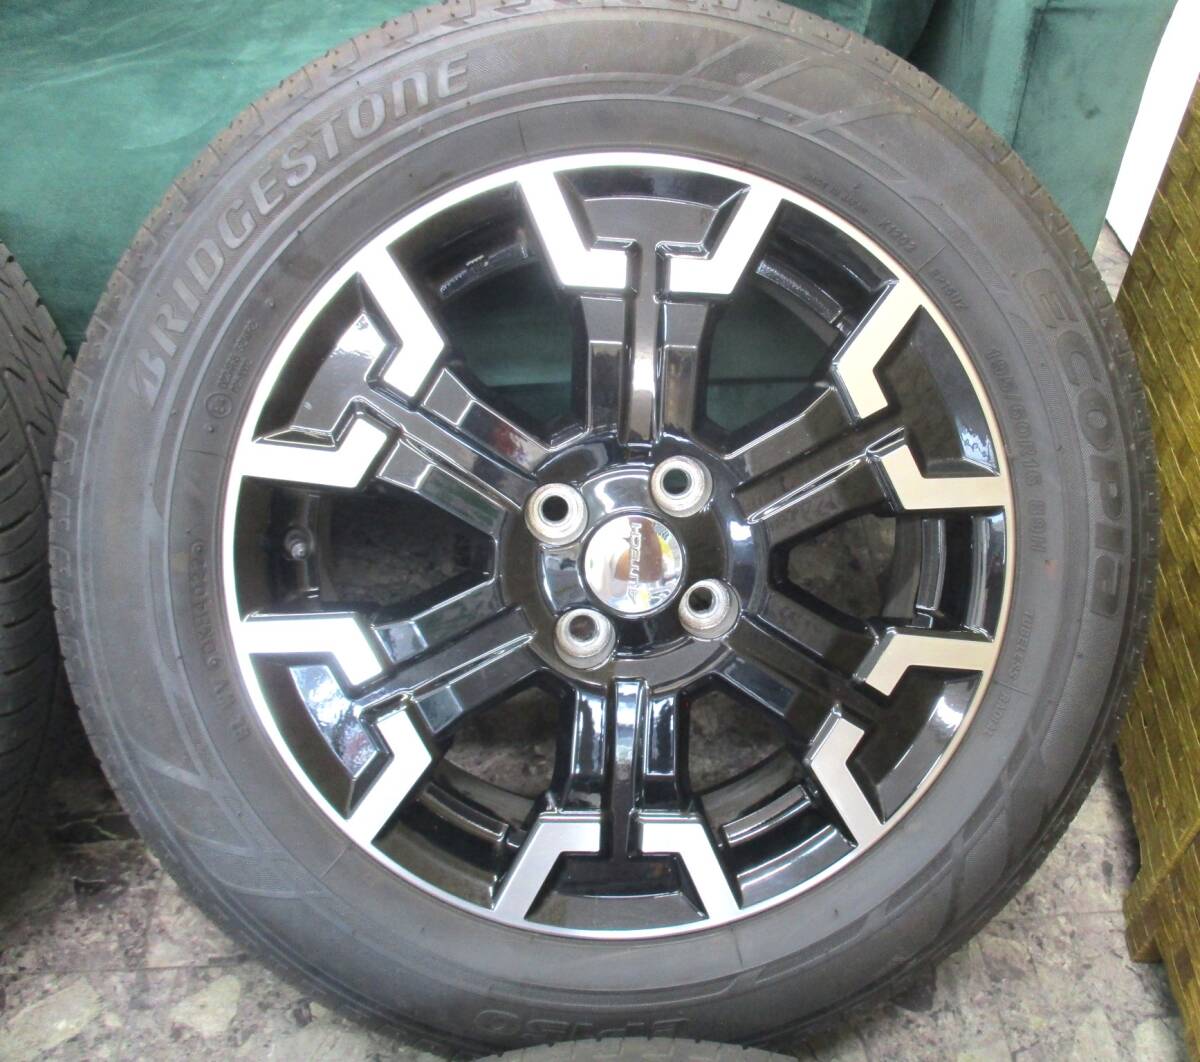 * beautiful goods Nissan E13 Note "Autech" 16 -inch original aluminium + tire 195/60R16 89H Bridgestone *